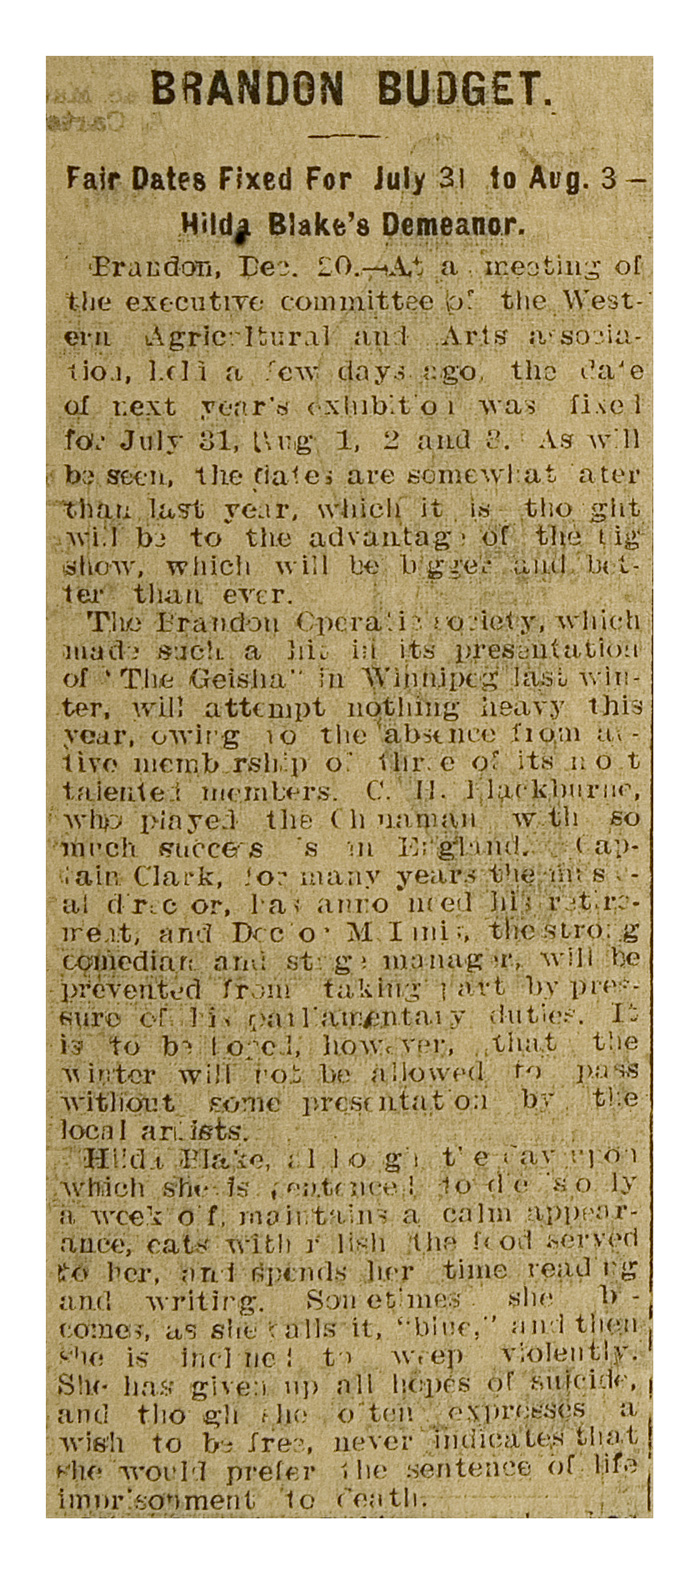 Article du Manitoba Morning Free Press, 21 dcembre 1899